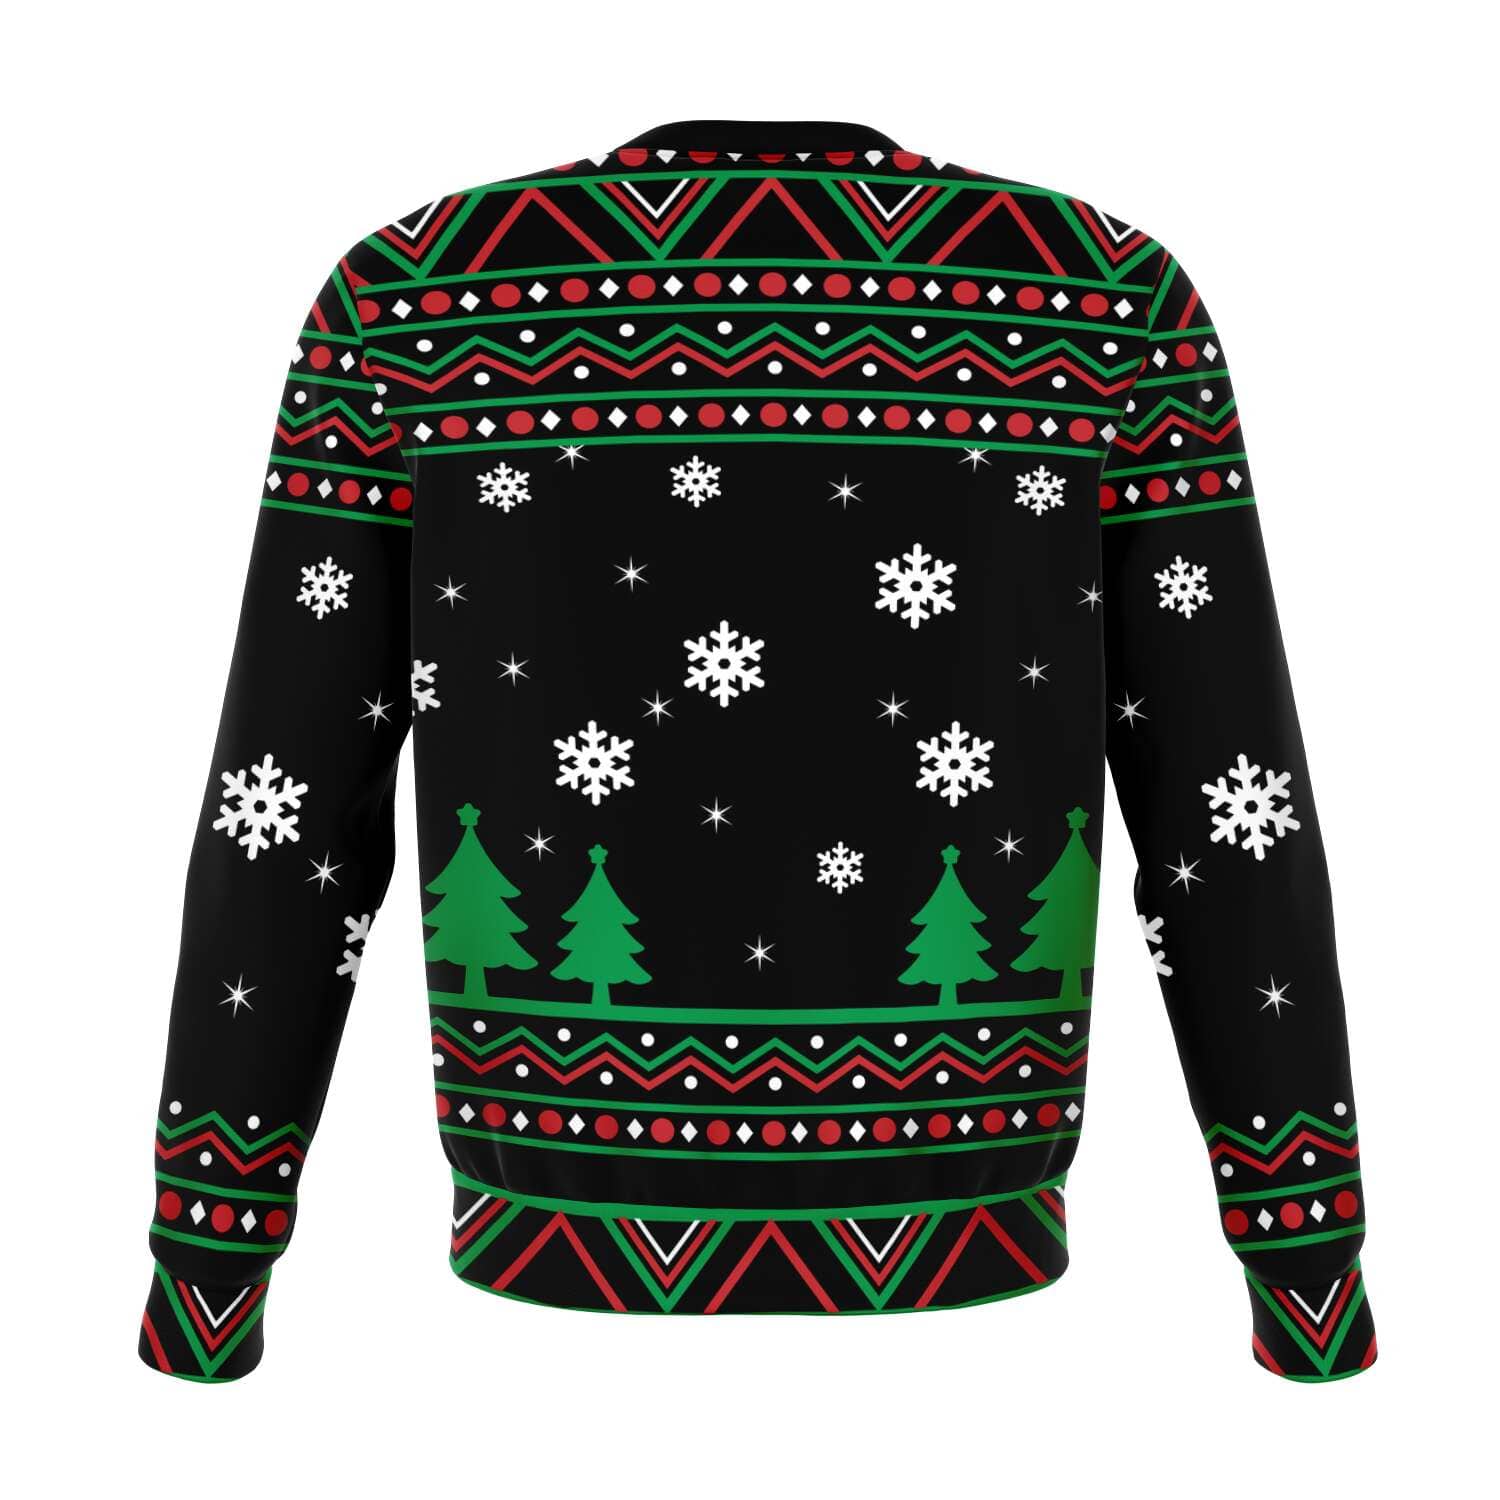 Brew Dolf - Funny Reindeer Rudolph Beer Ugly Christmas Sweater (Sweatshirt)